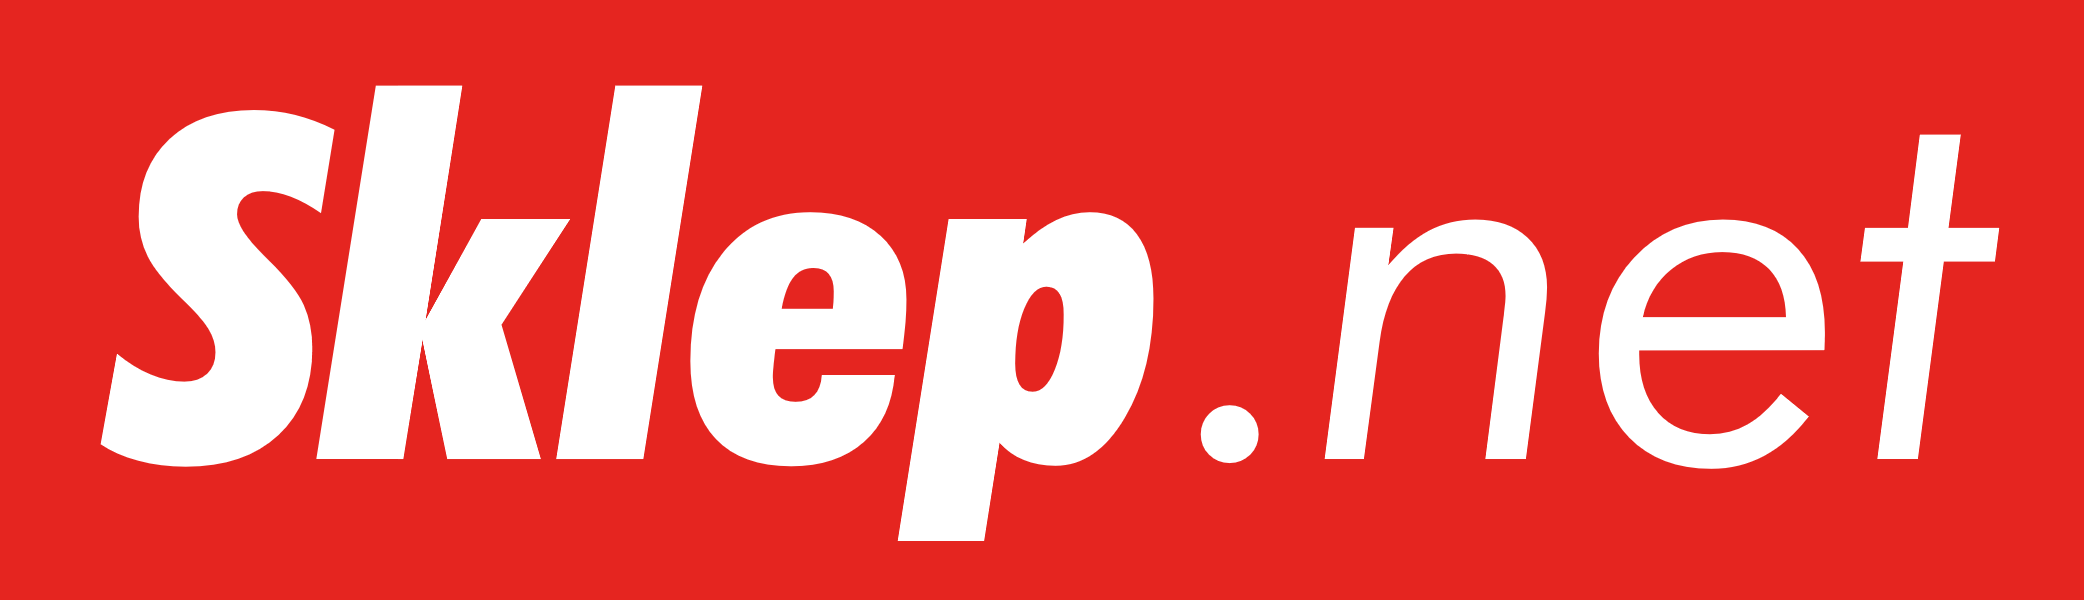 SKLEP.net RED Logo